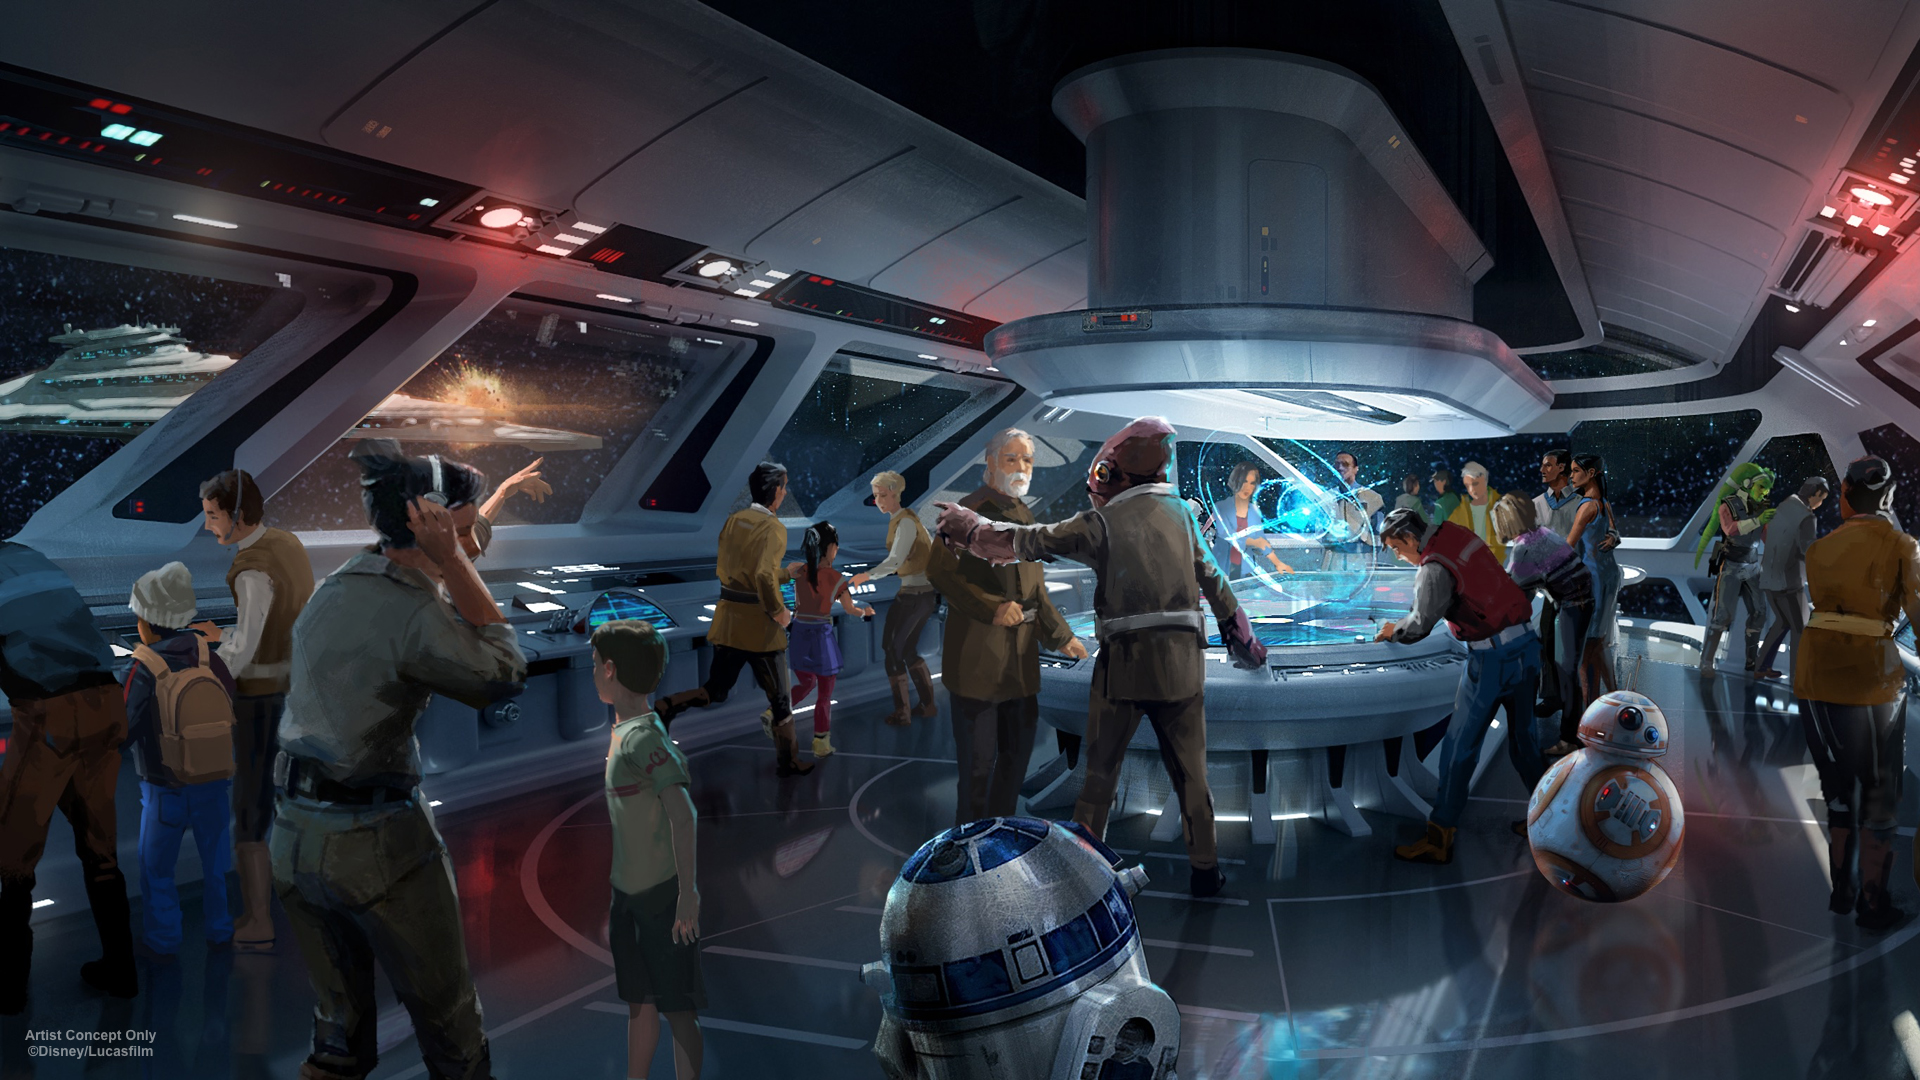 Walt Disney World Resort In Florida Is Opening A Completely Immersive Star Wars Hotel